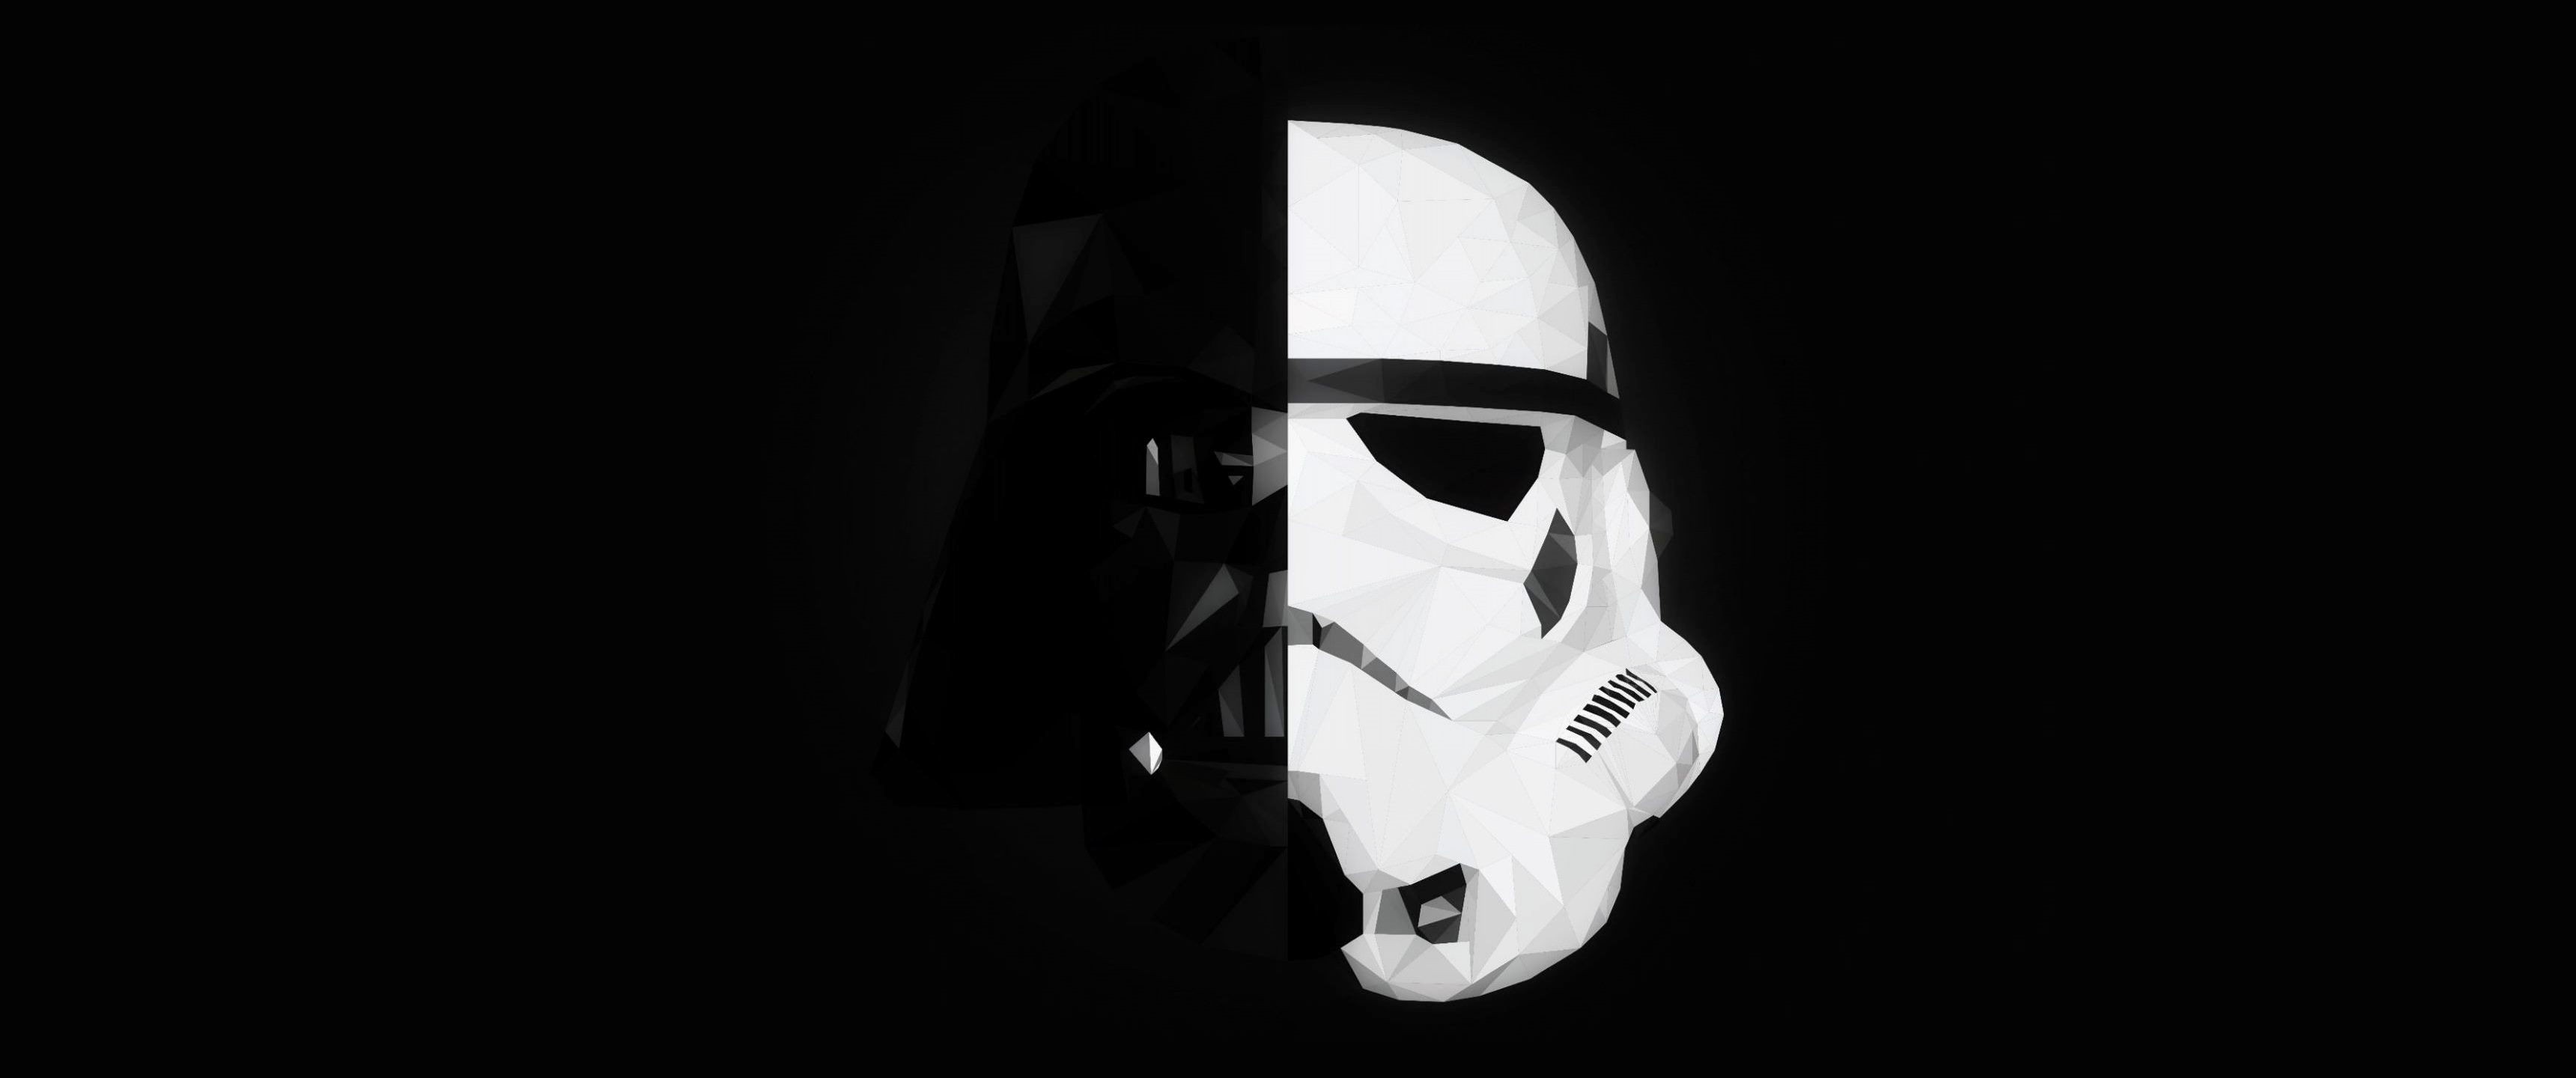 General 3440x1440 Star Wars stormtrooper Darth Vader mask splitting minimalism Imperial Stormtrooper black background movie characters